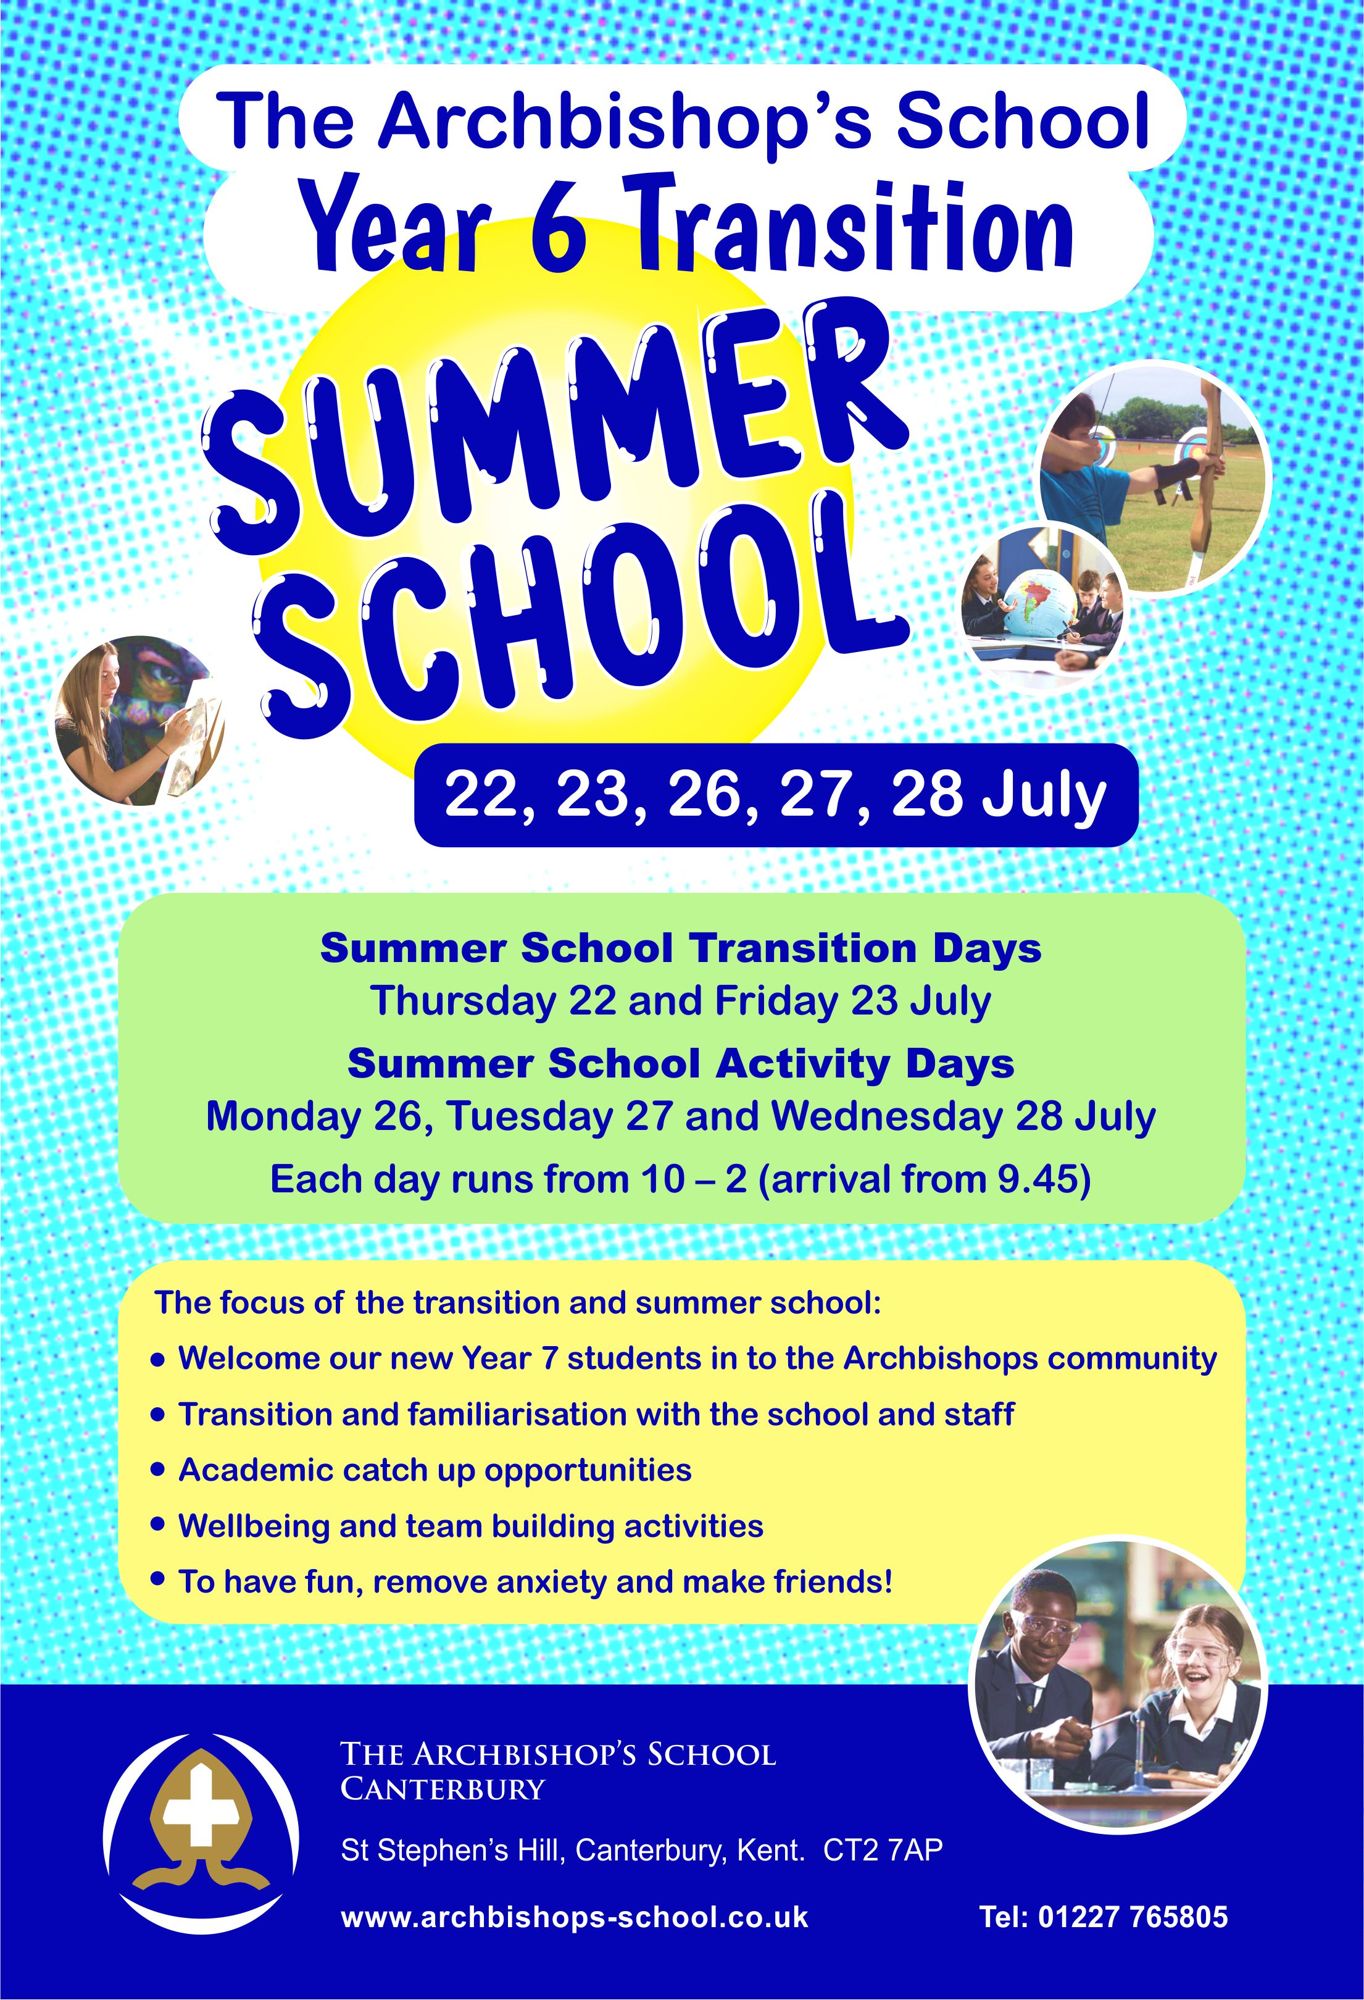 Year 6 transition summer school 2021 poster